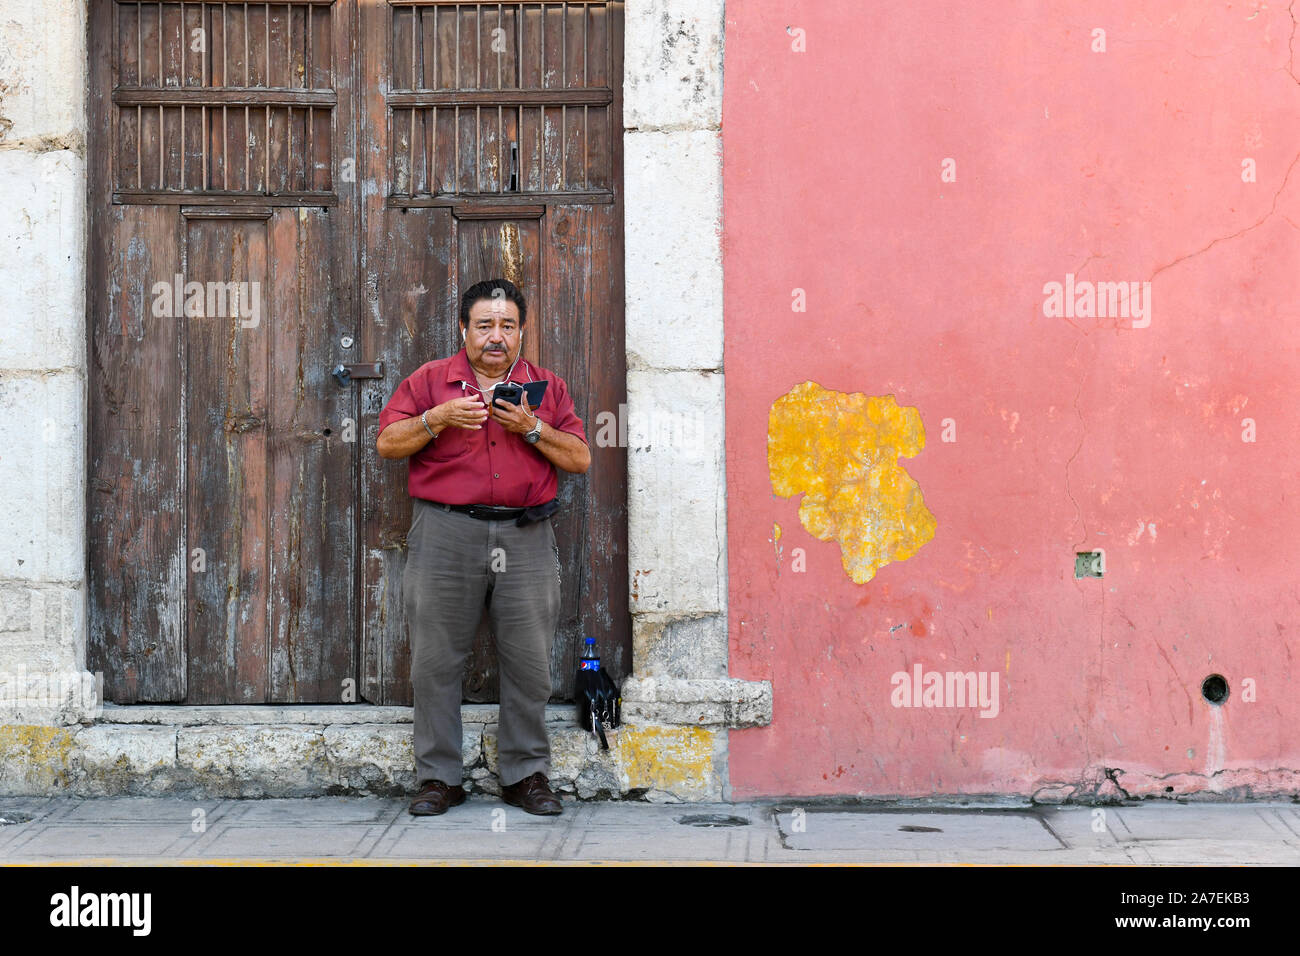 Man on his mobile phone, Merida, Mexico Stock Photo